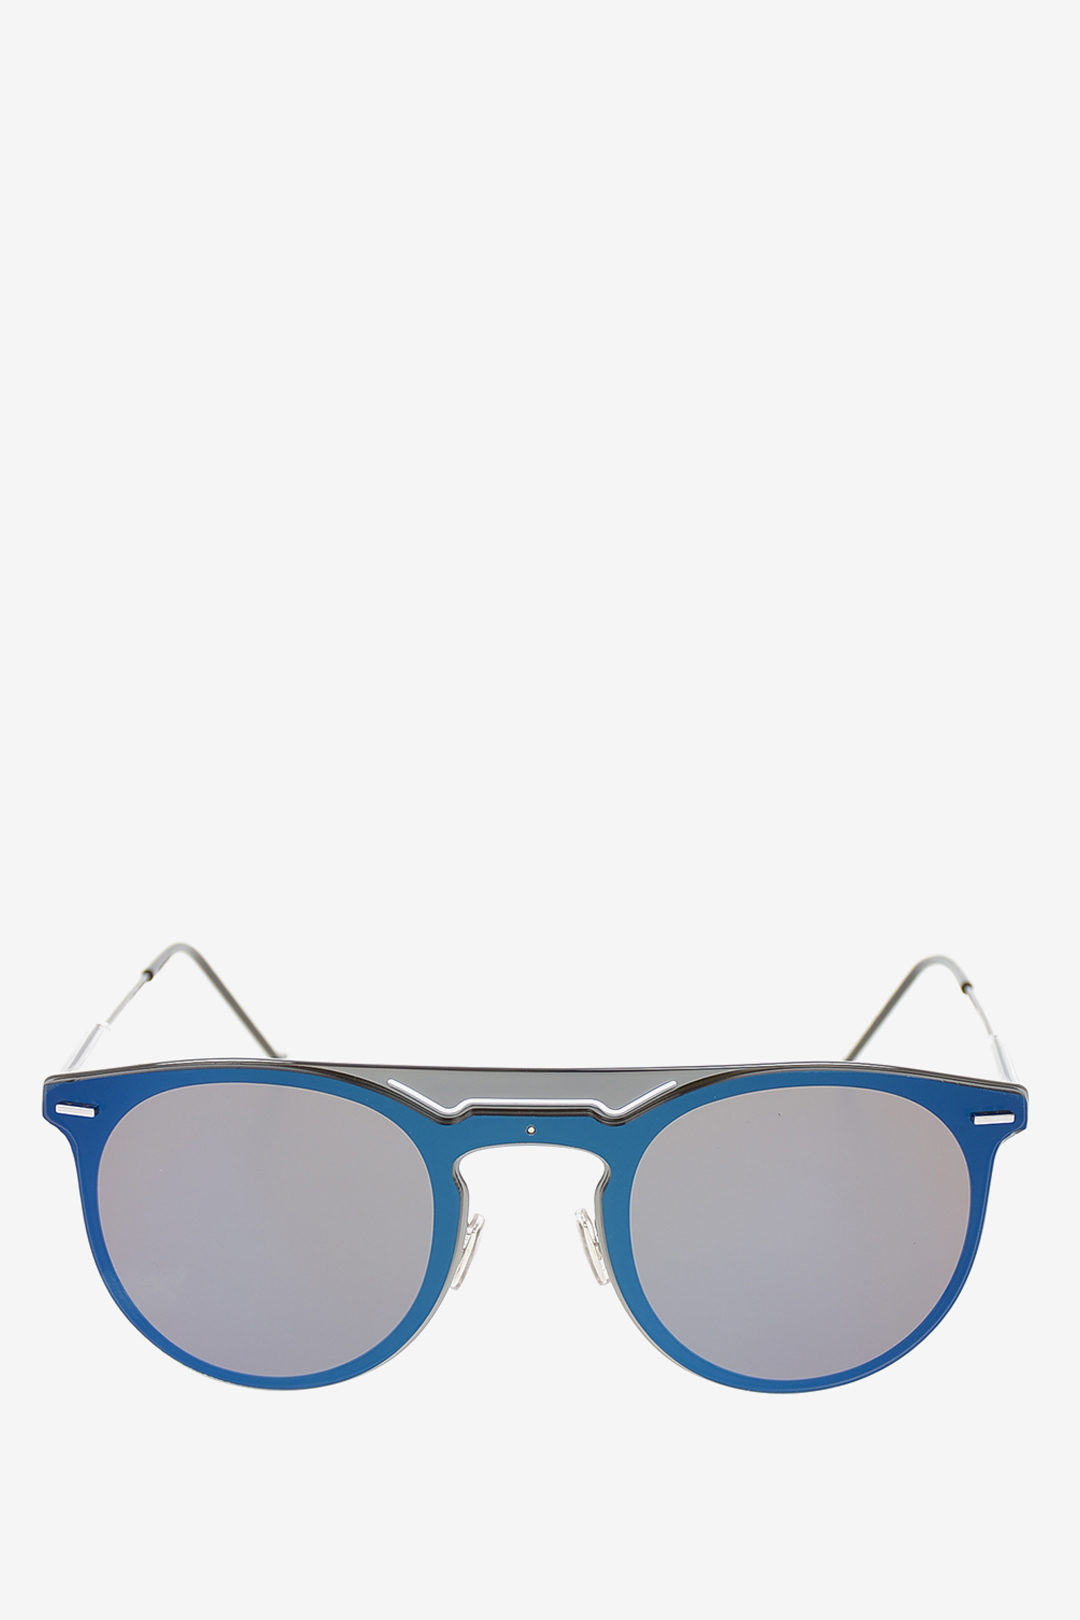 Dior Wayfarer DIOR0211FS Sunglasses men 